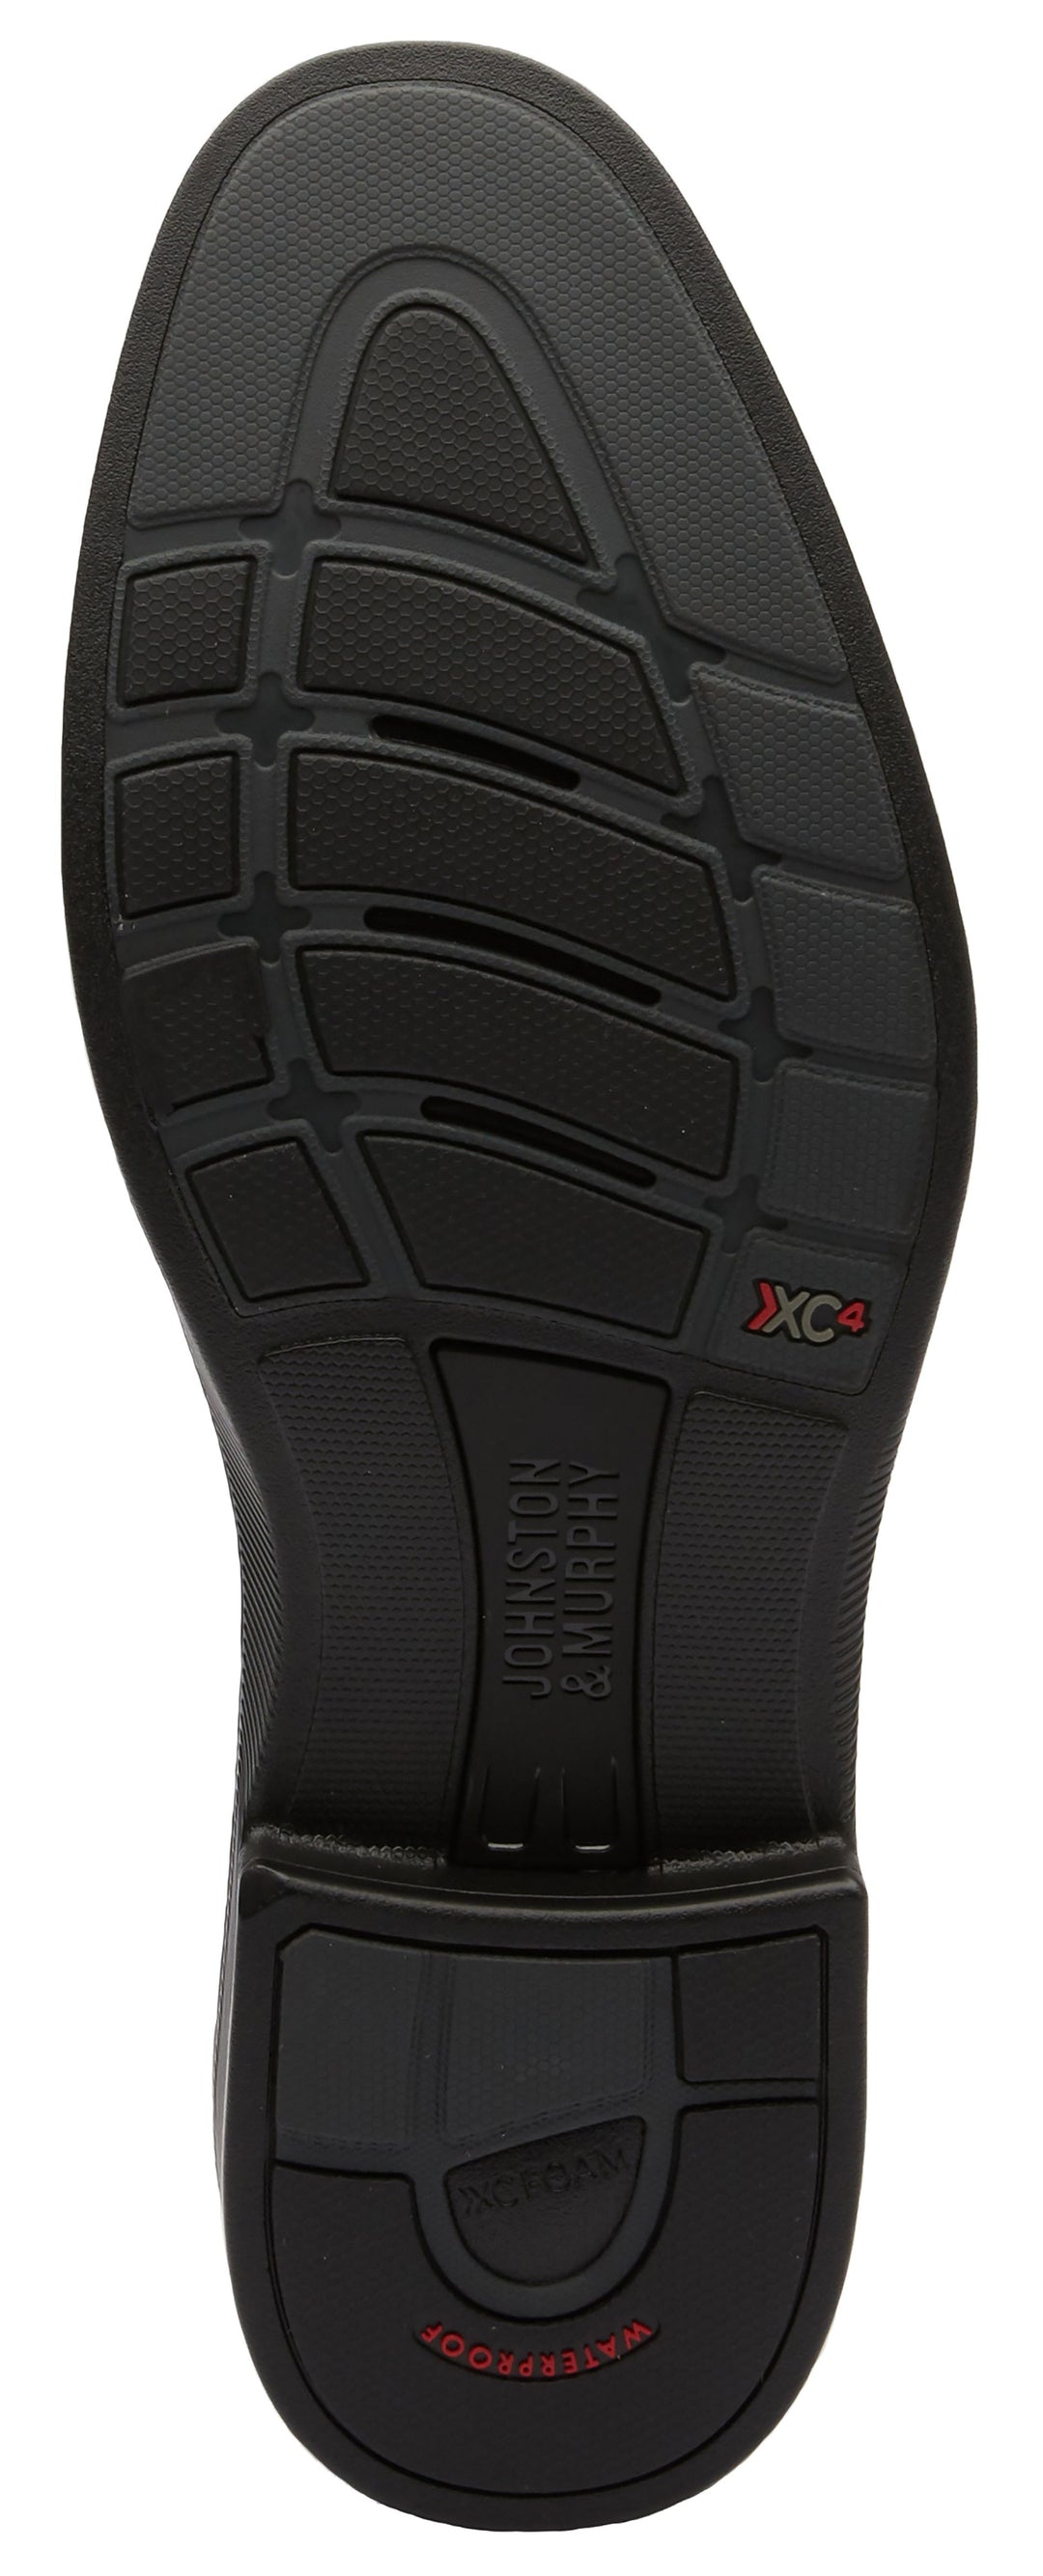 Men's Johnston & Murphy XC4 Maddox Plain Toe Color: Black